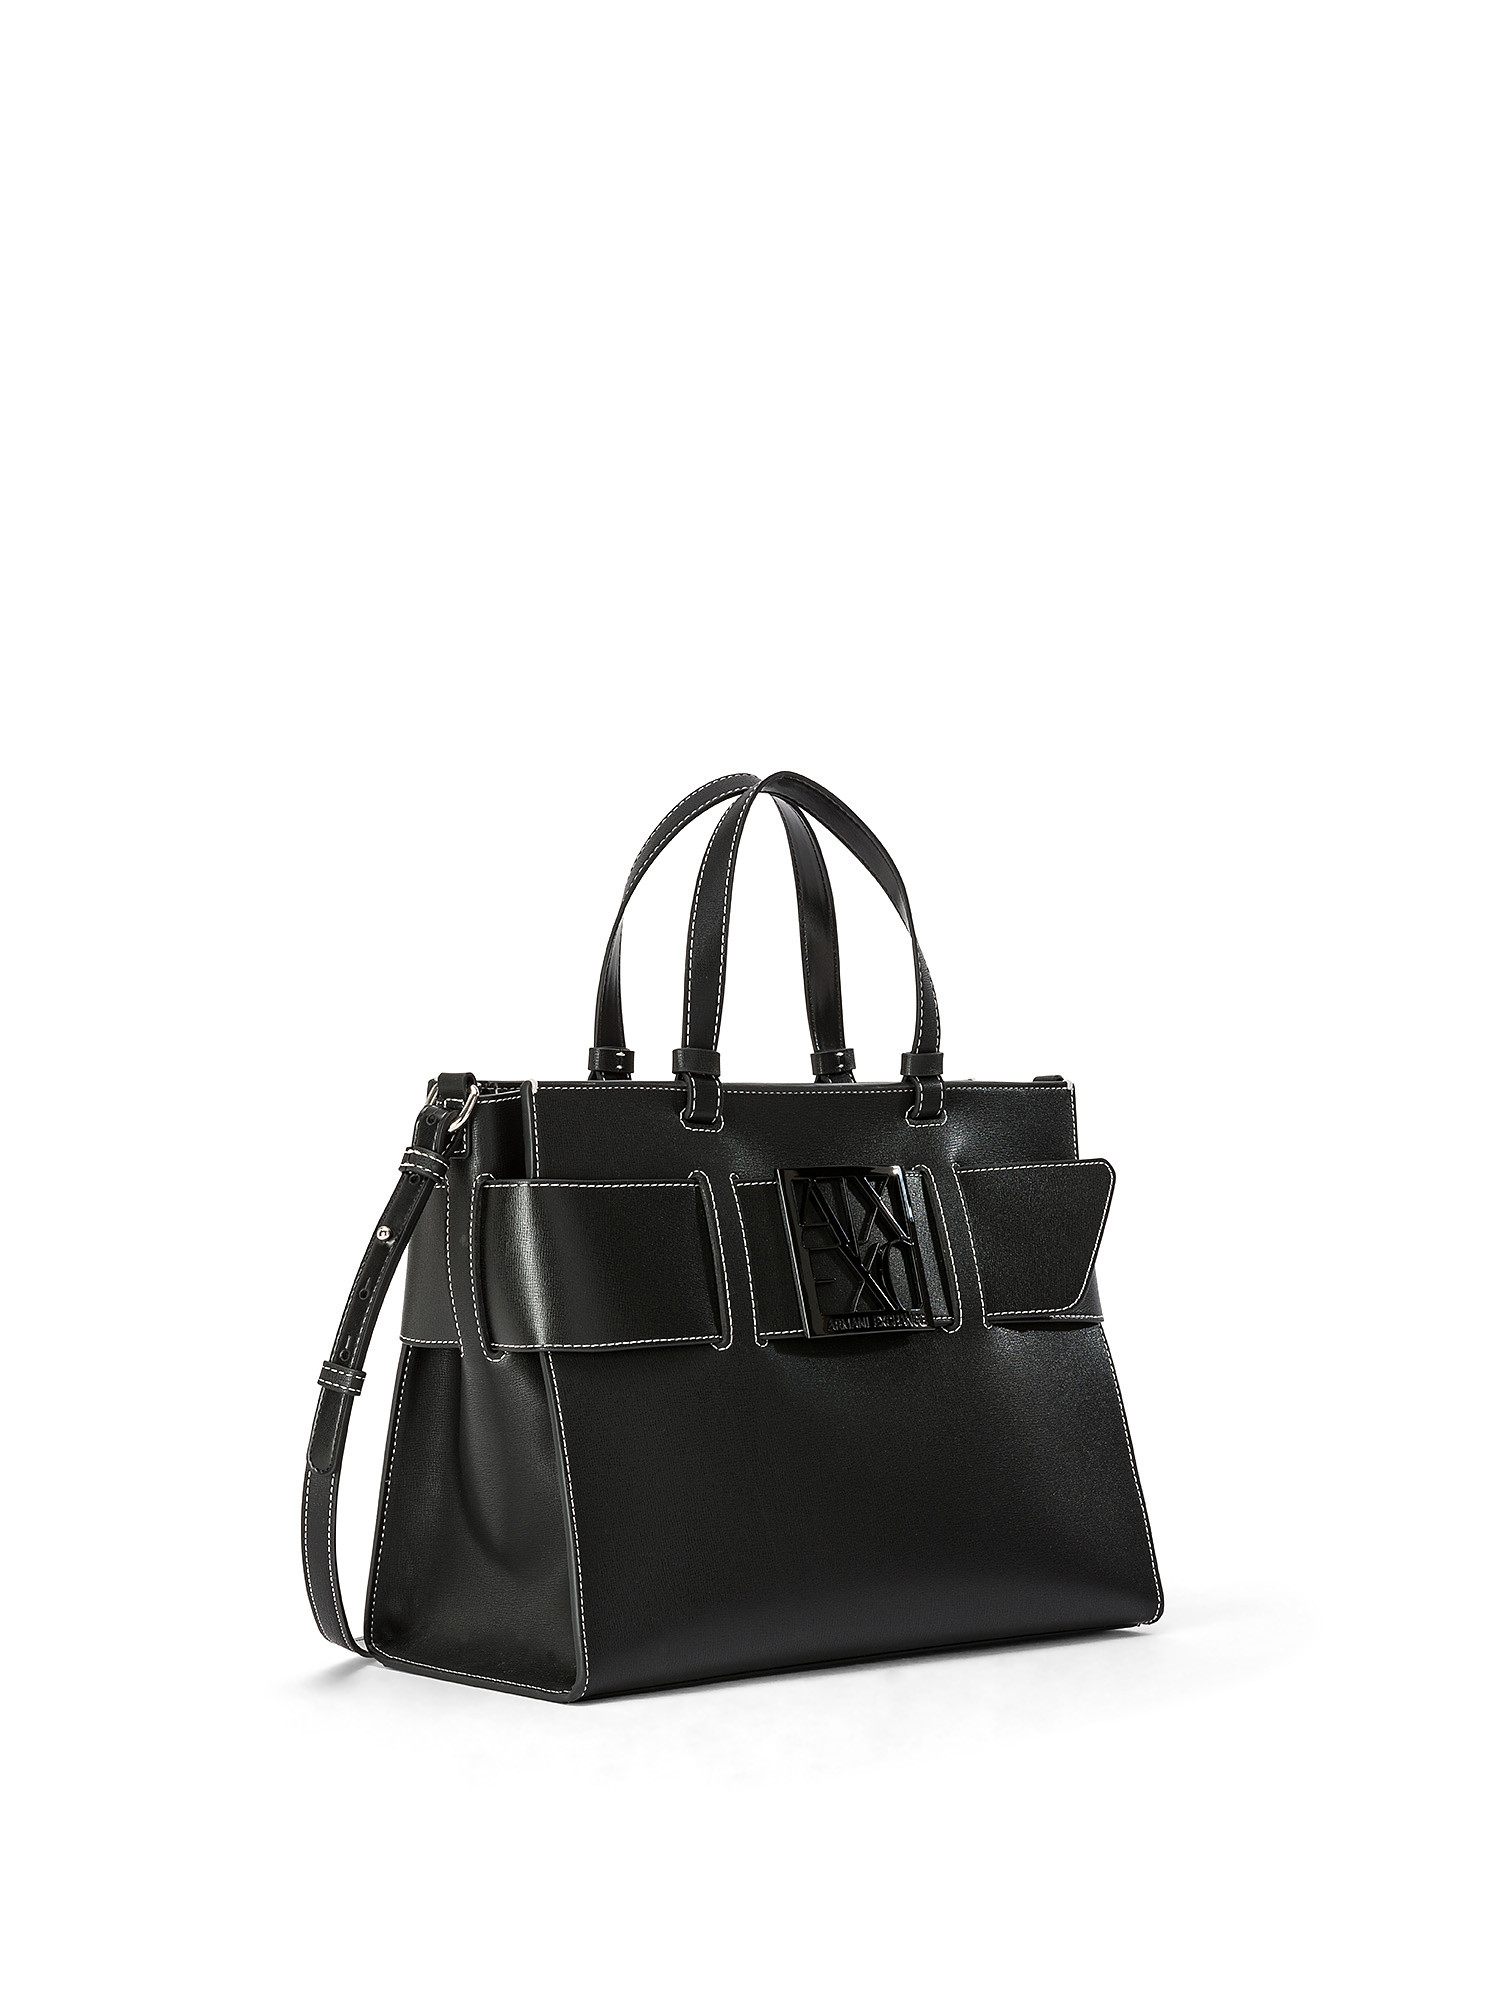 Armani Exchange - Handbag with logo, Black, large image number 1